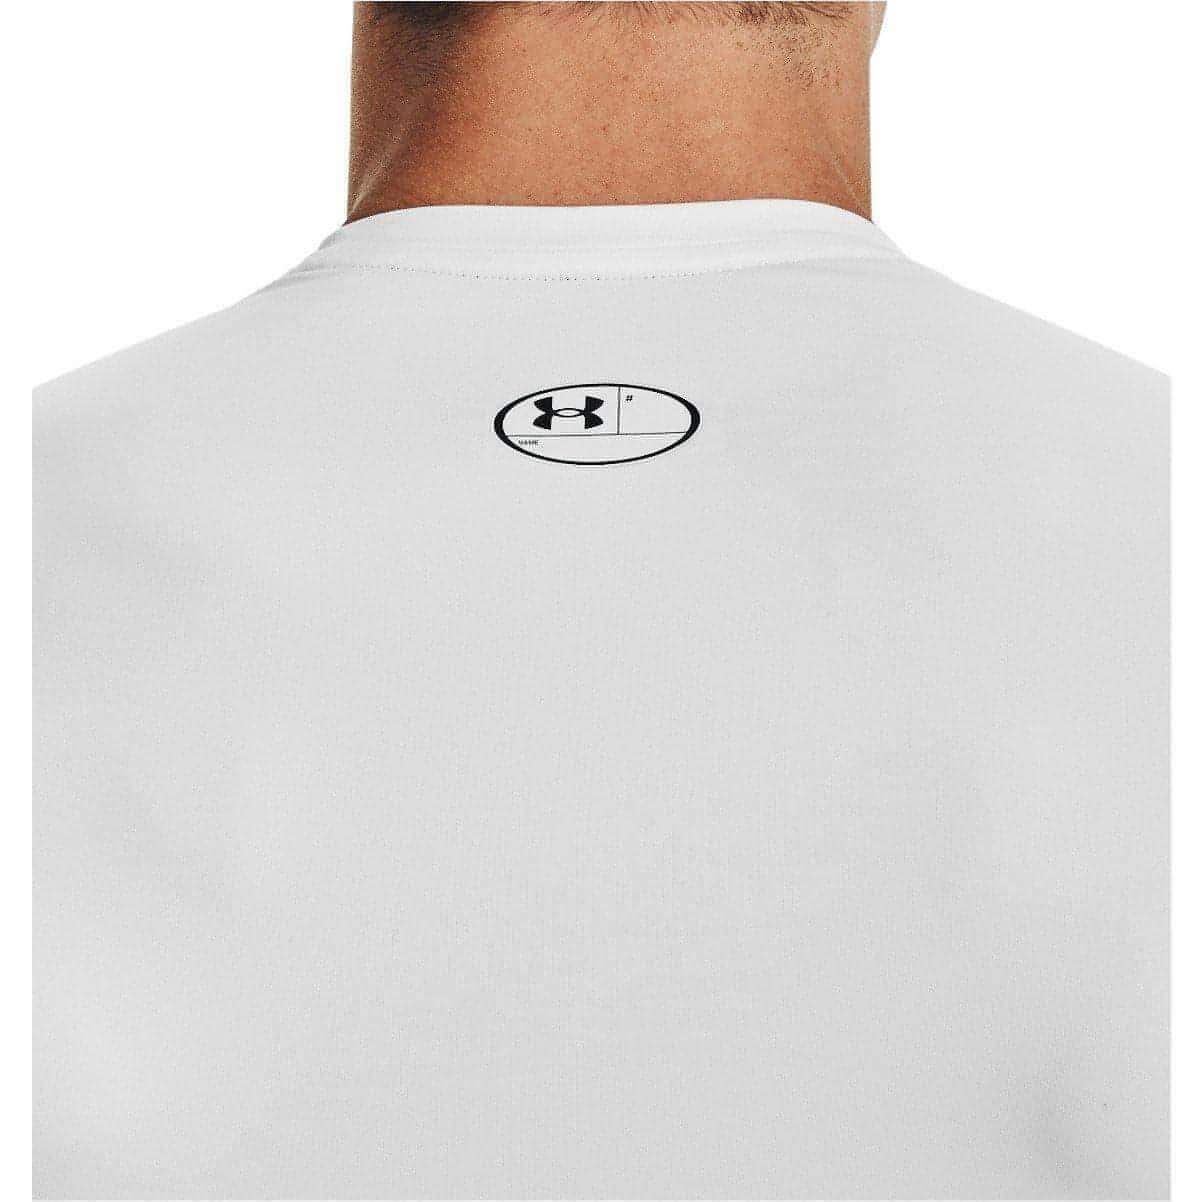 Under Armour UA Men's Heat Gear Armour Compression Shirt Athletic